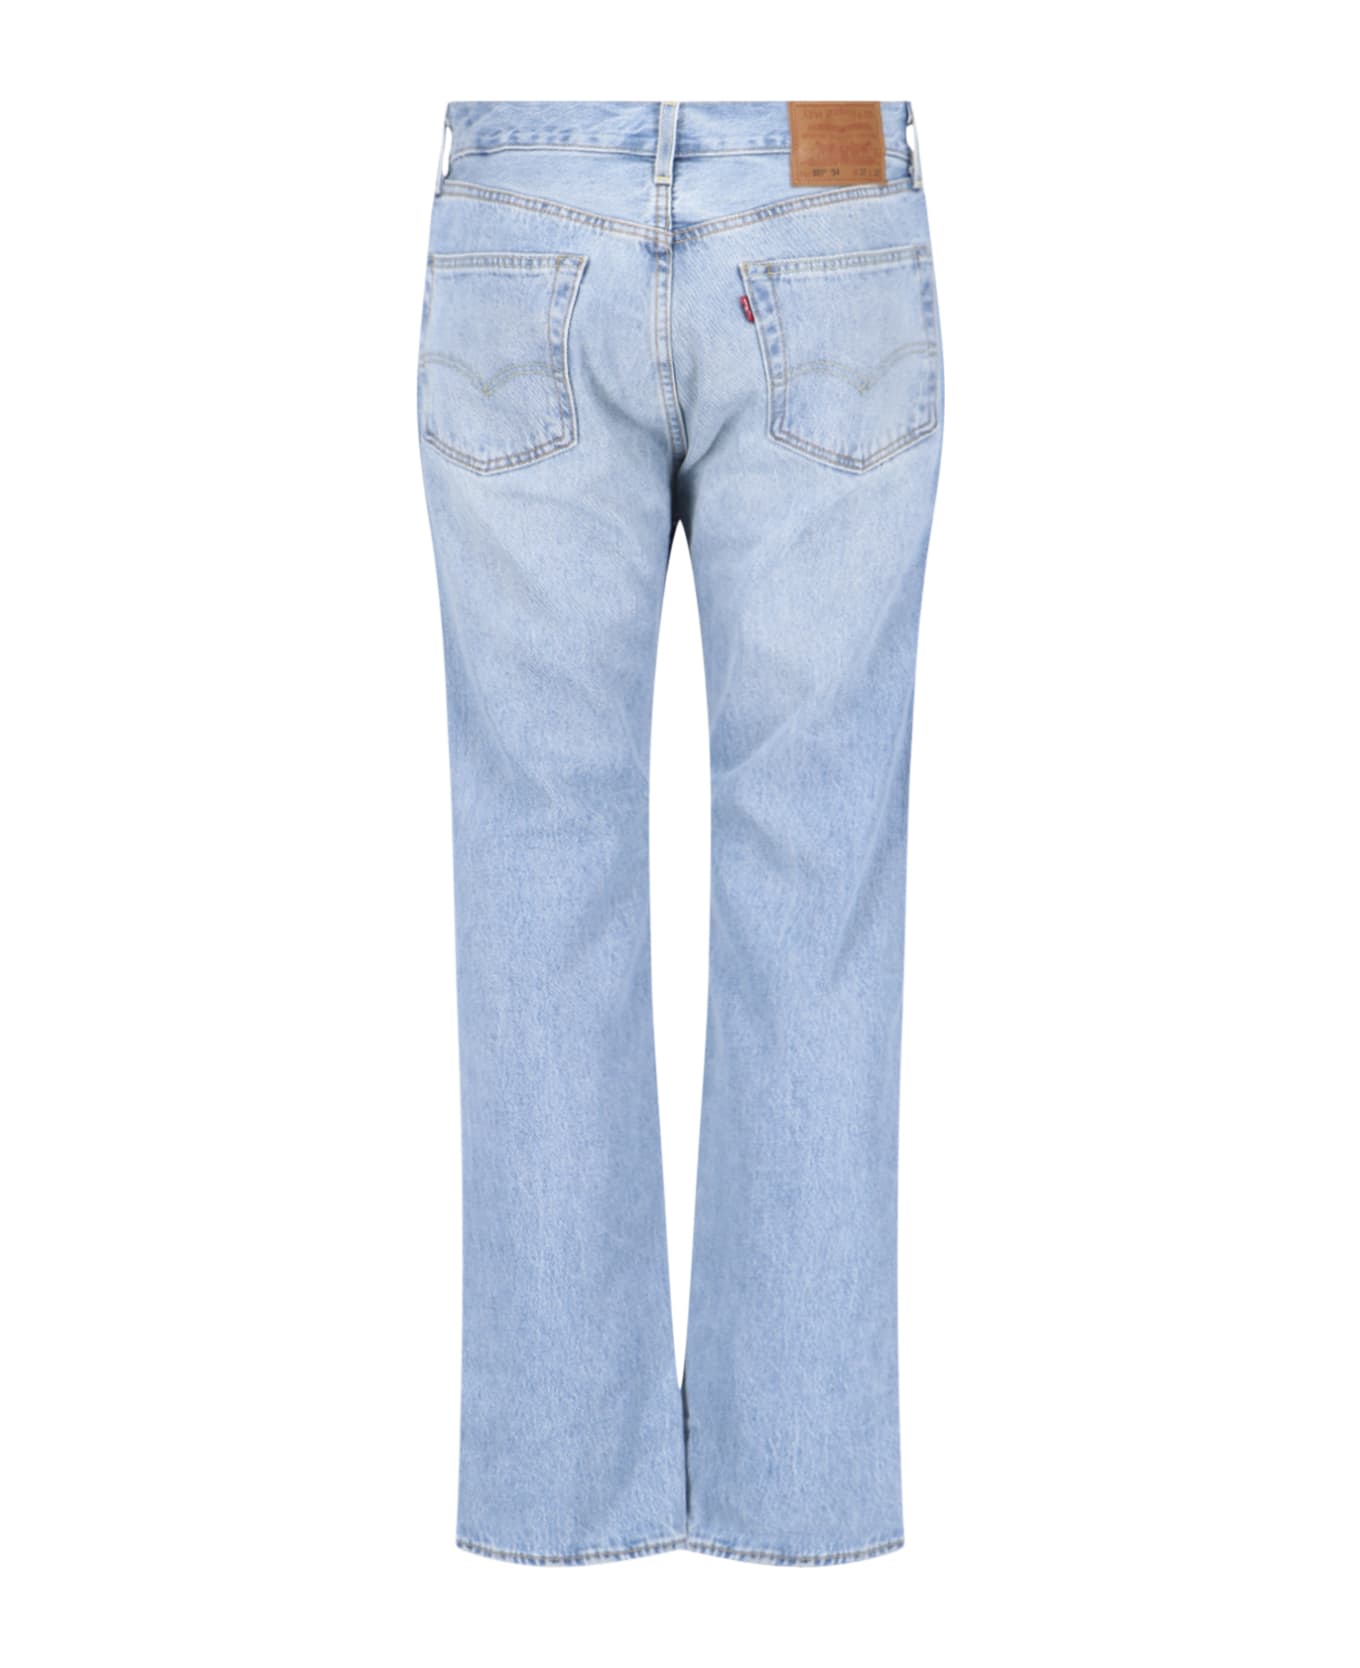 Levi's "501" Jeans - Light Blue デニム